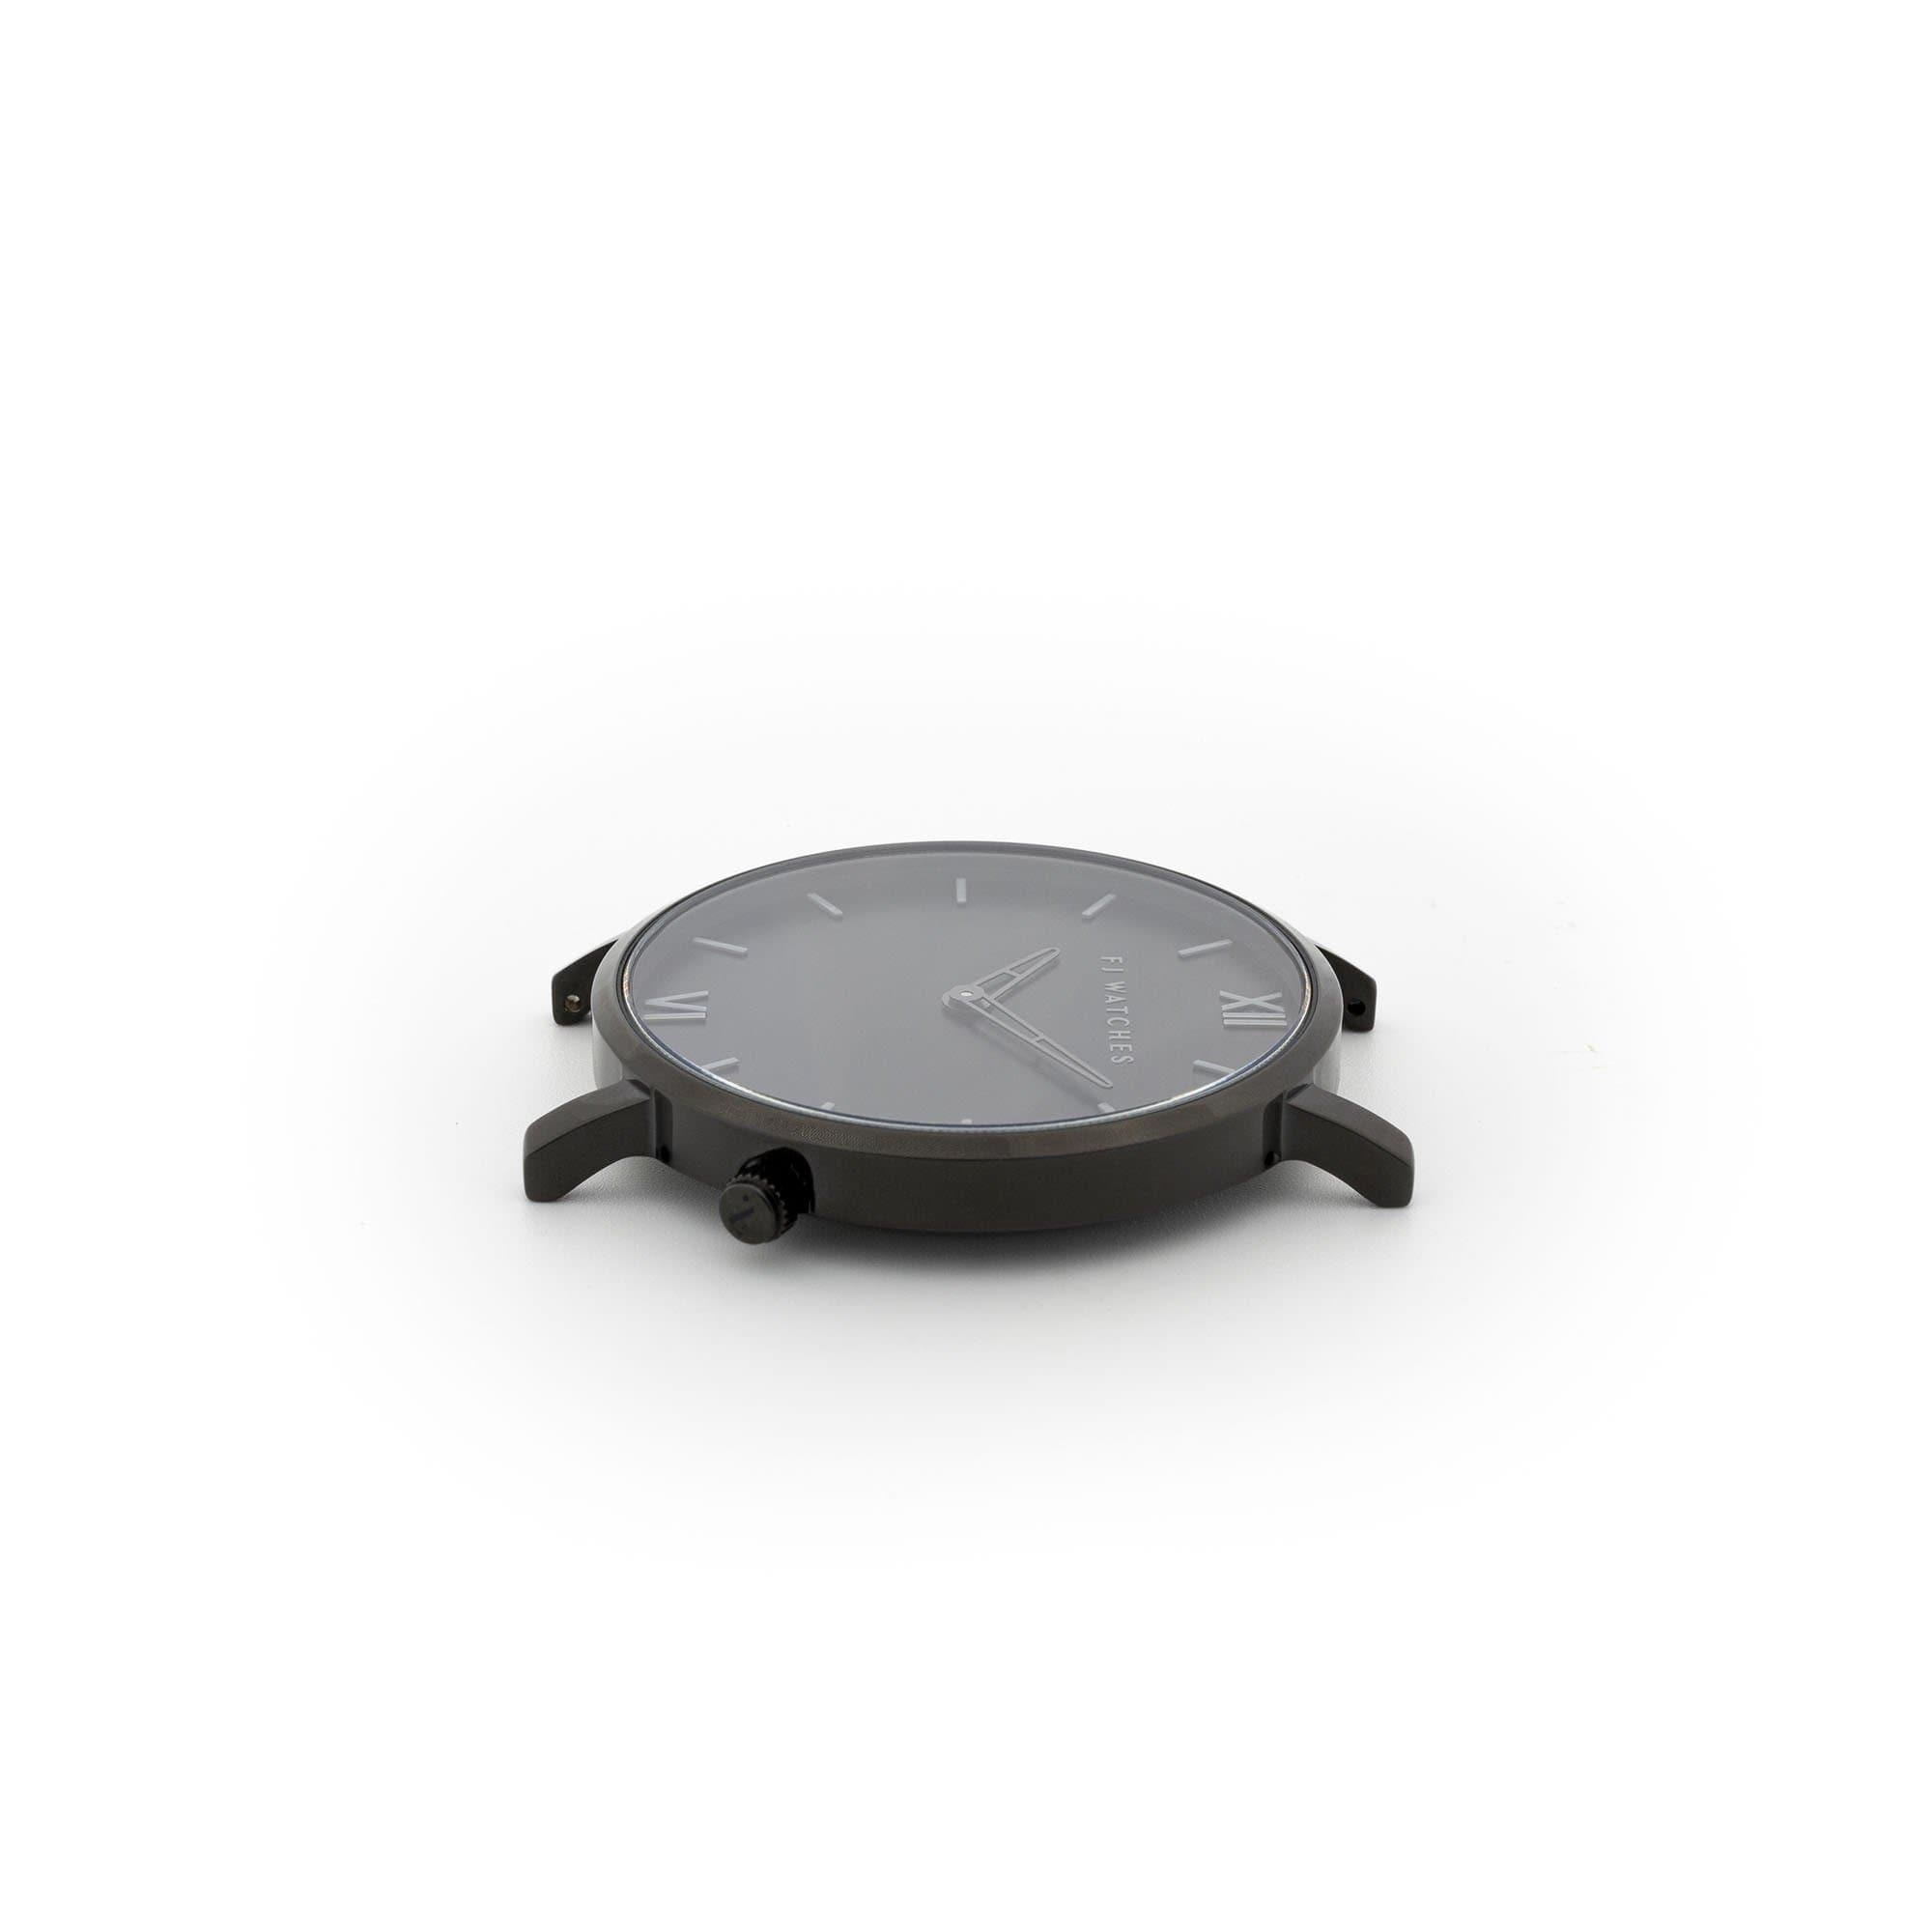 FJ Watches Dark moon all black watch for women 36mm minimalist dial